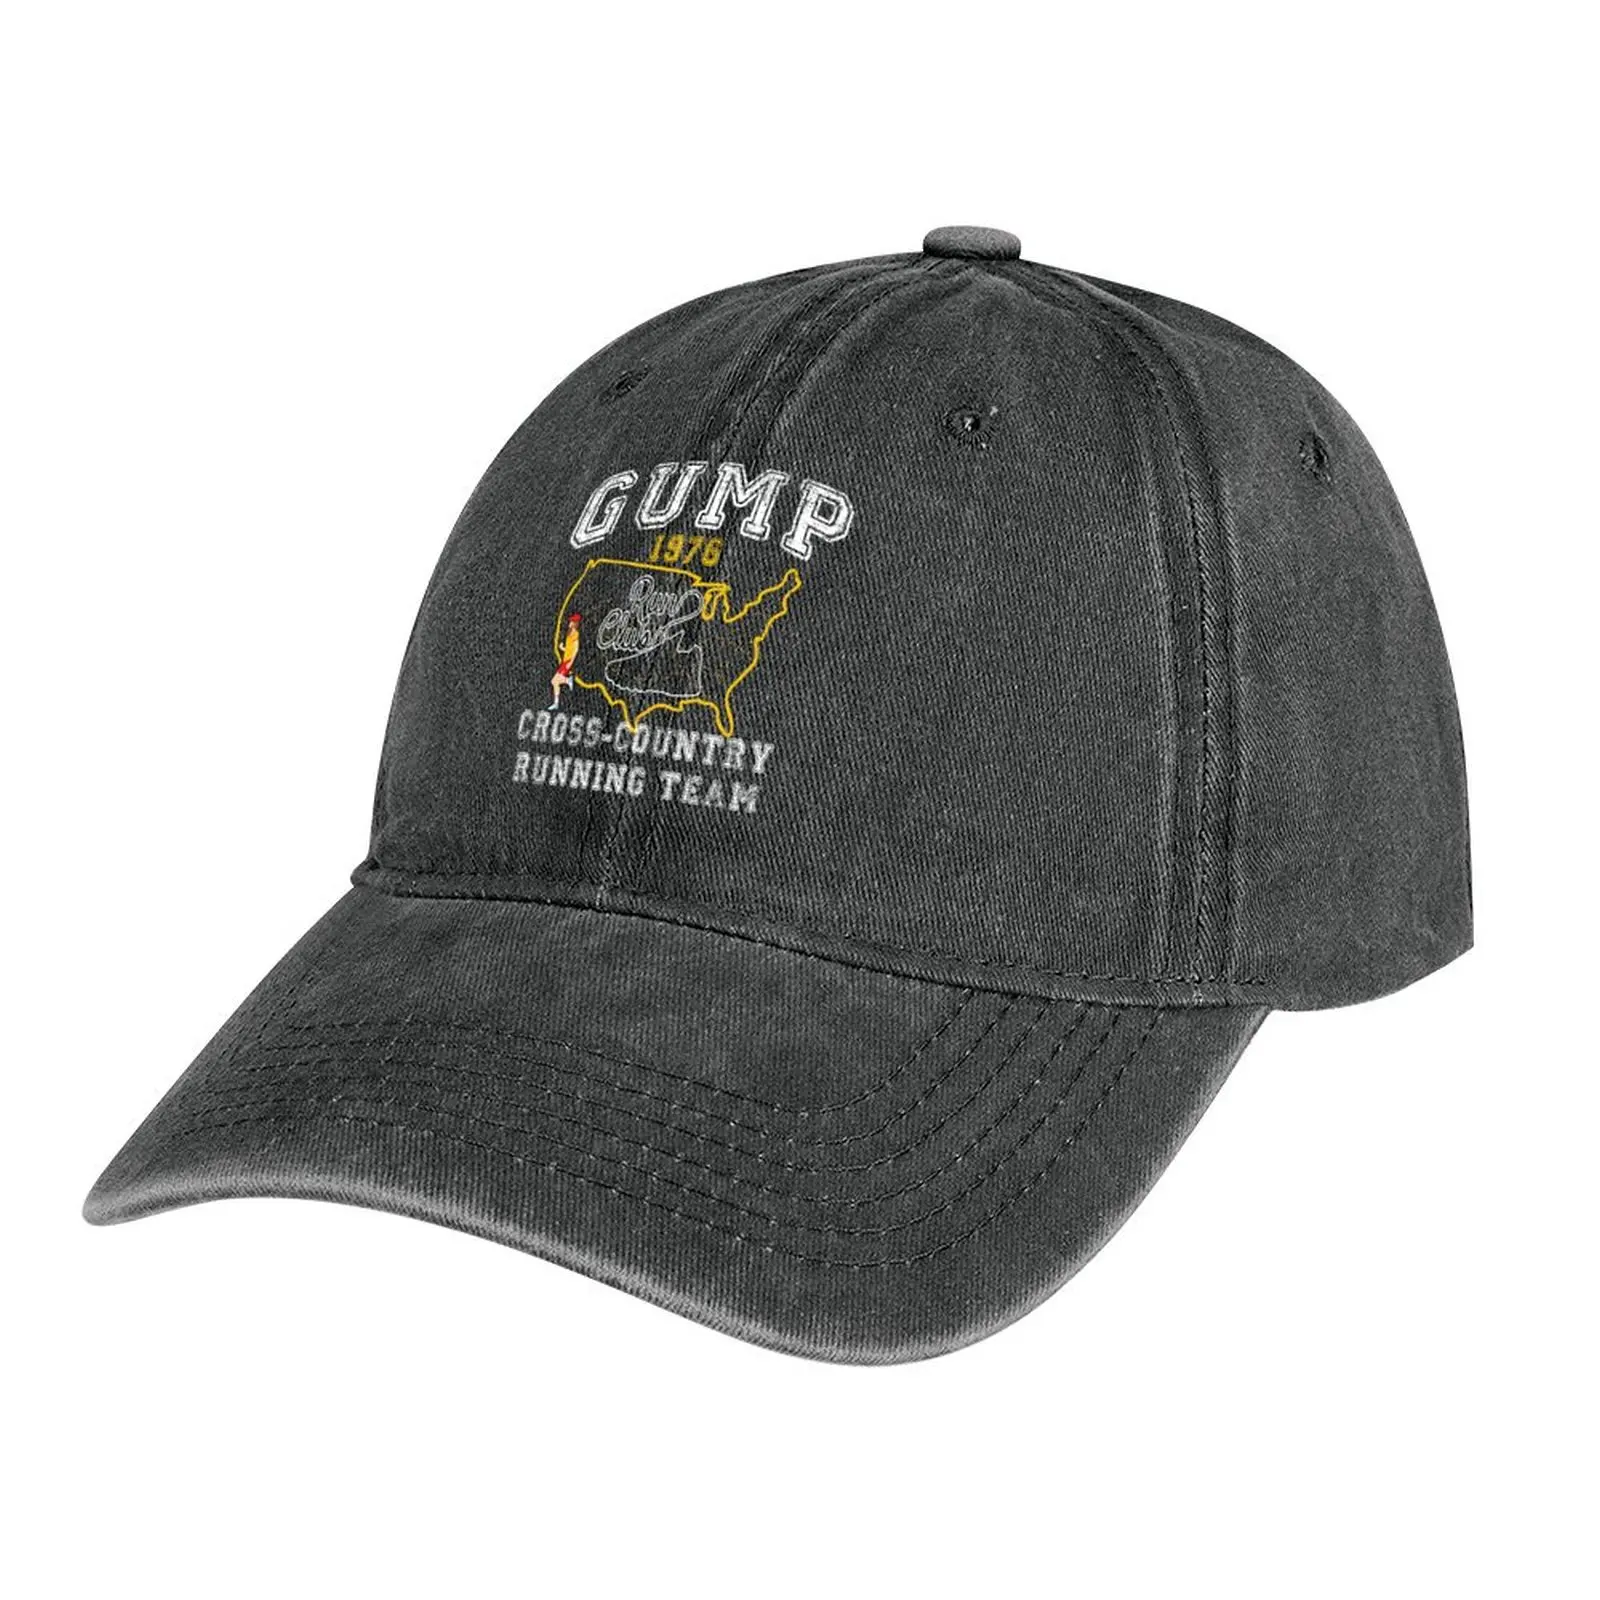 

Gump CC ковбойская шляпа для бега альпинизма новая шляпа забавная шляпа черная женская пляжная Мужская